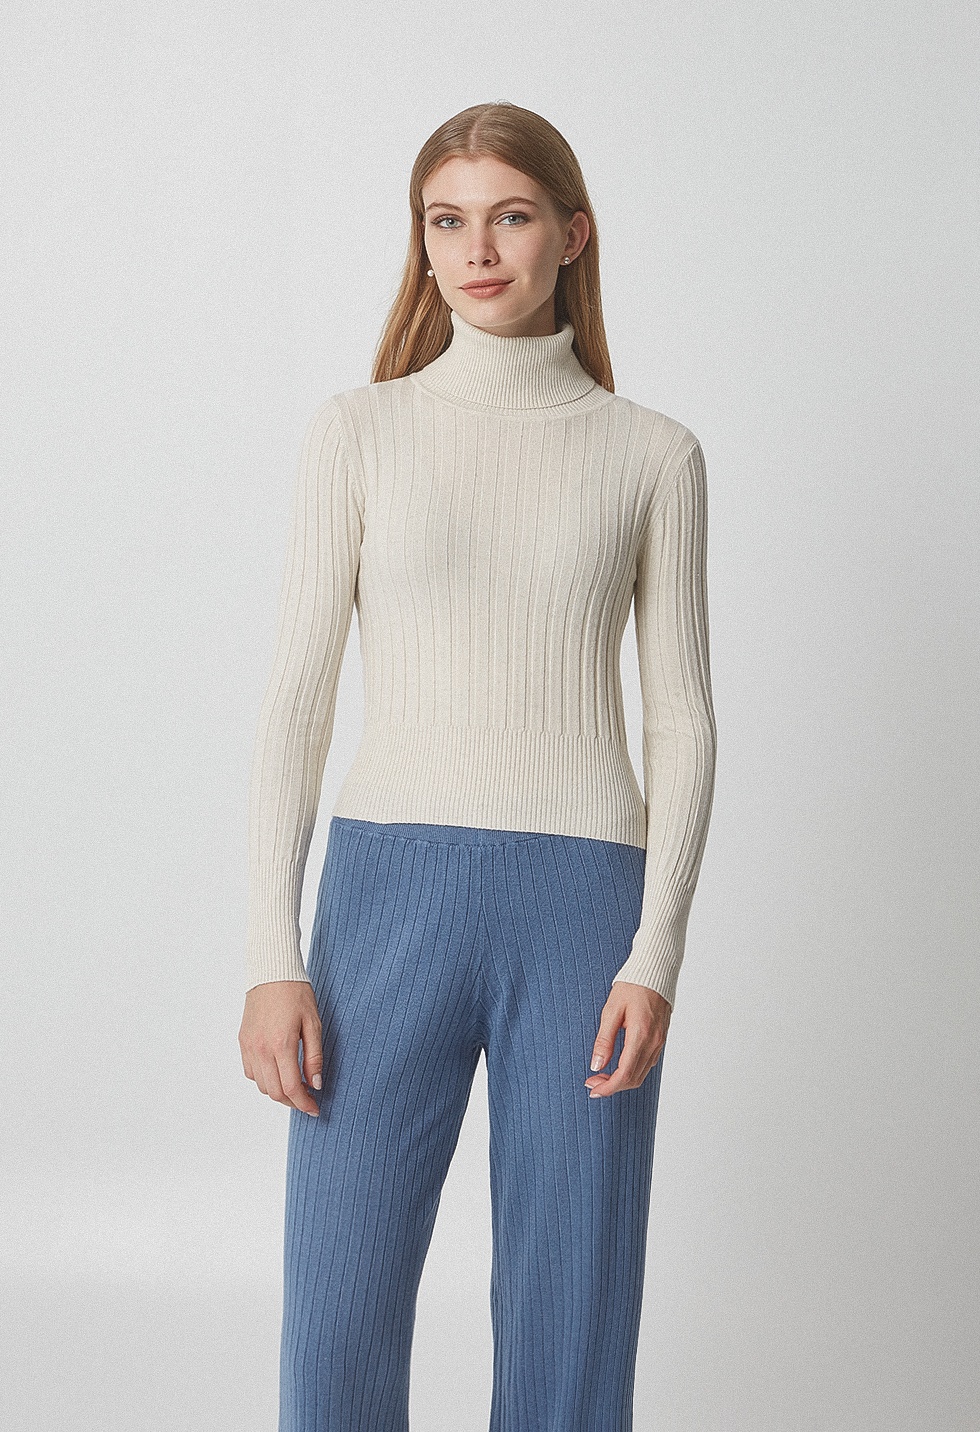 Rip-knit sweater